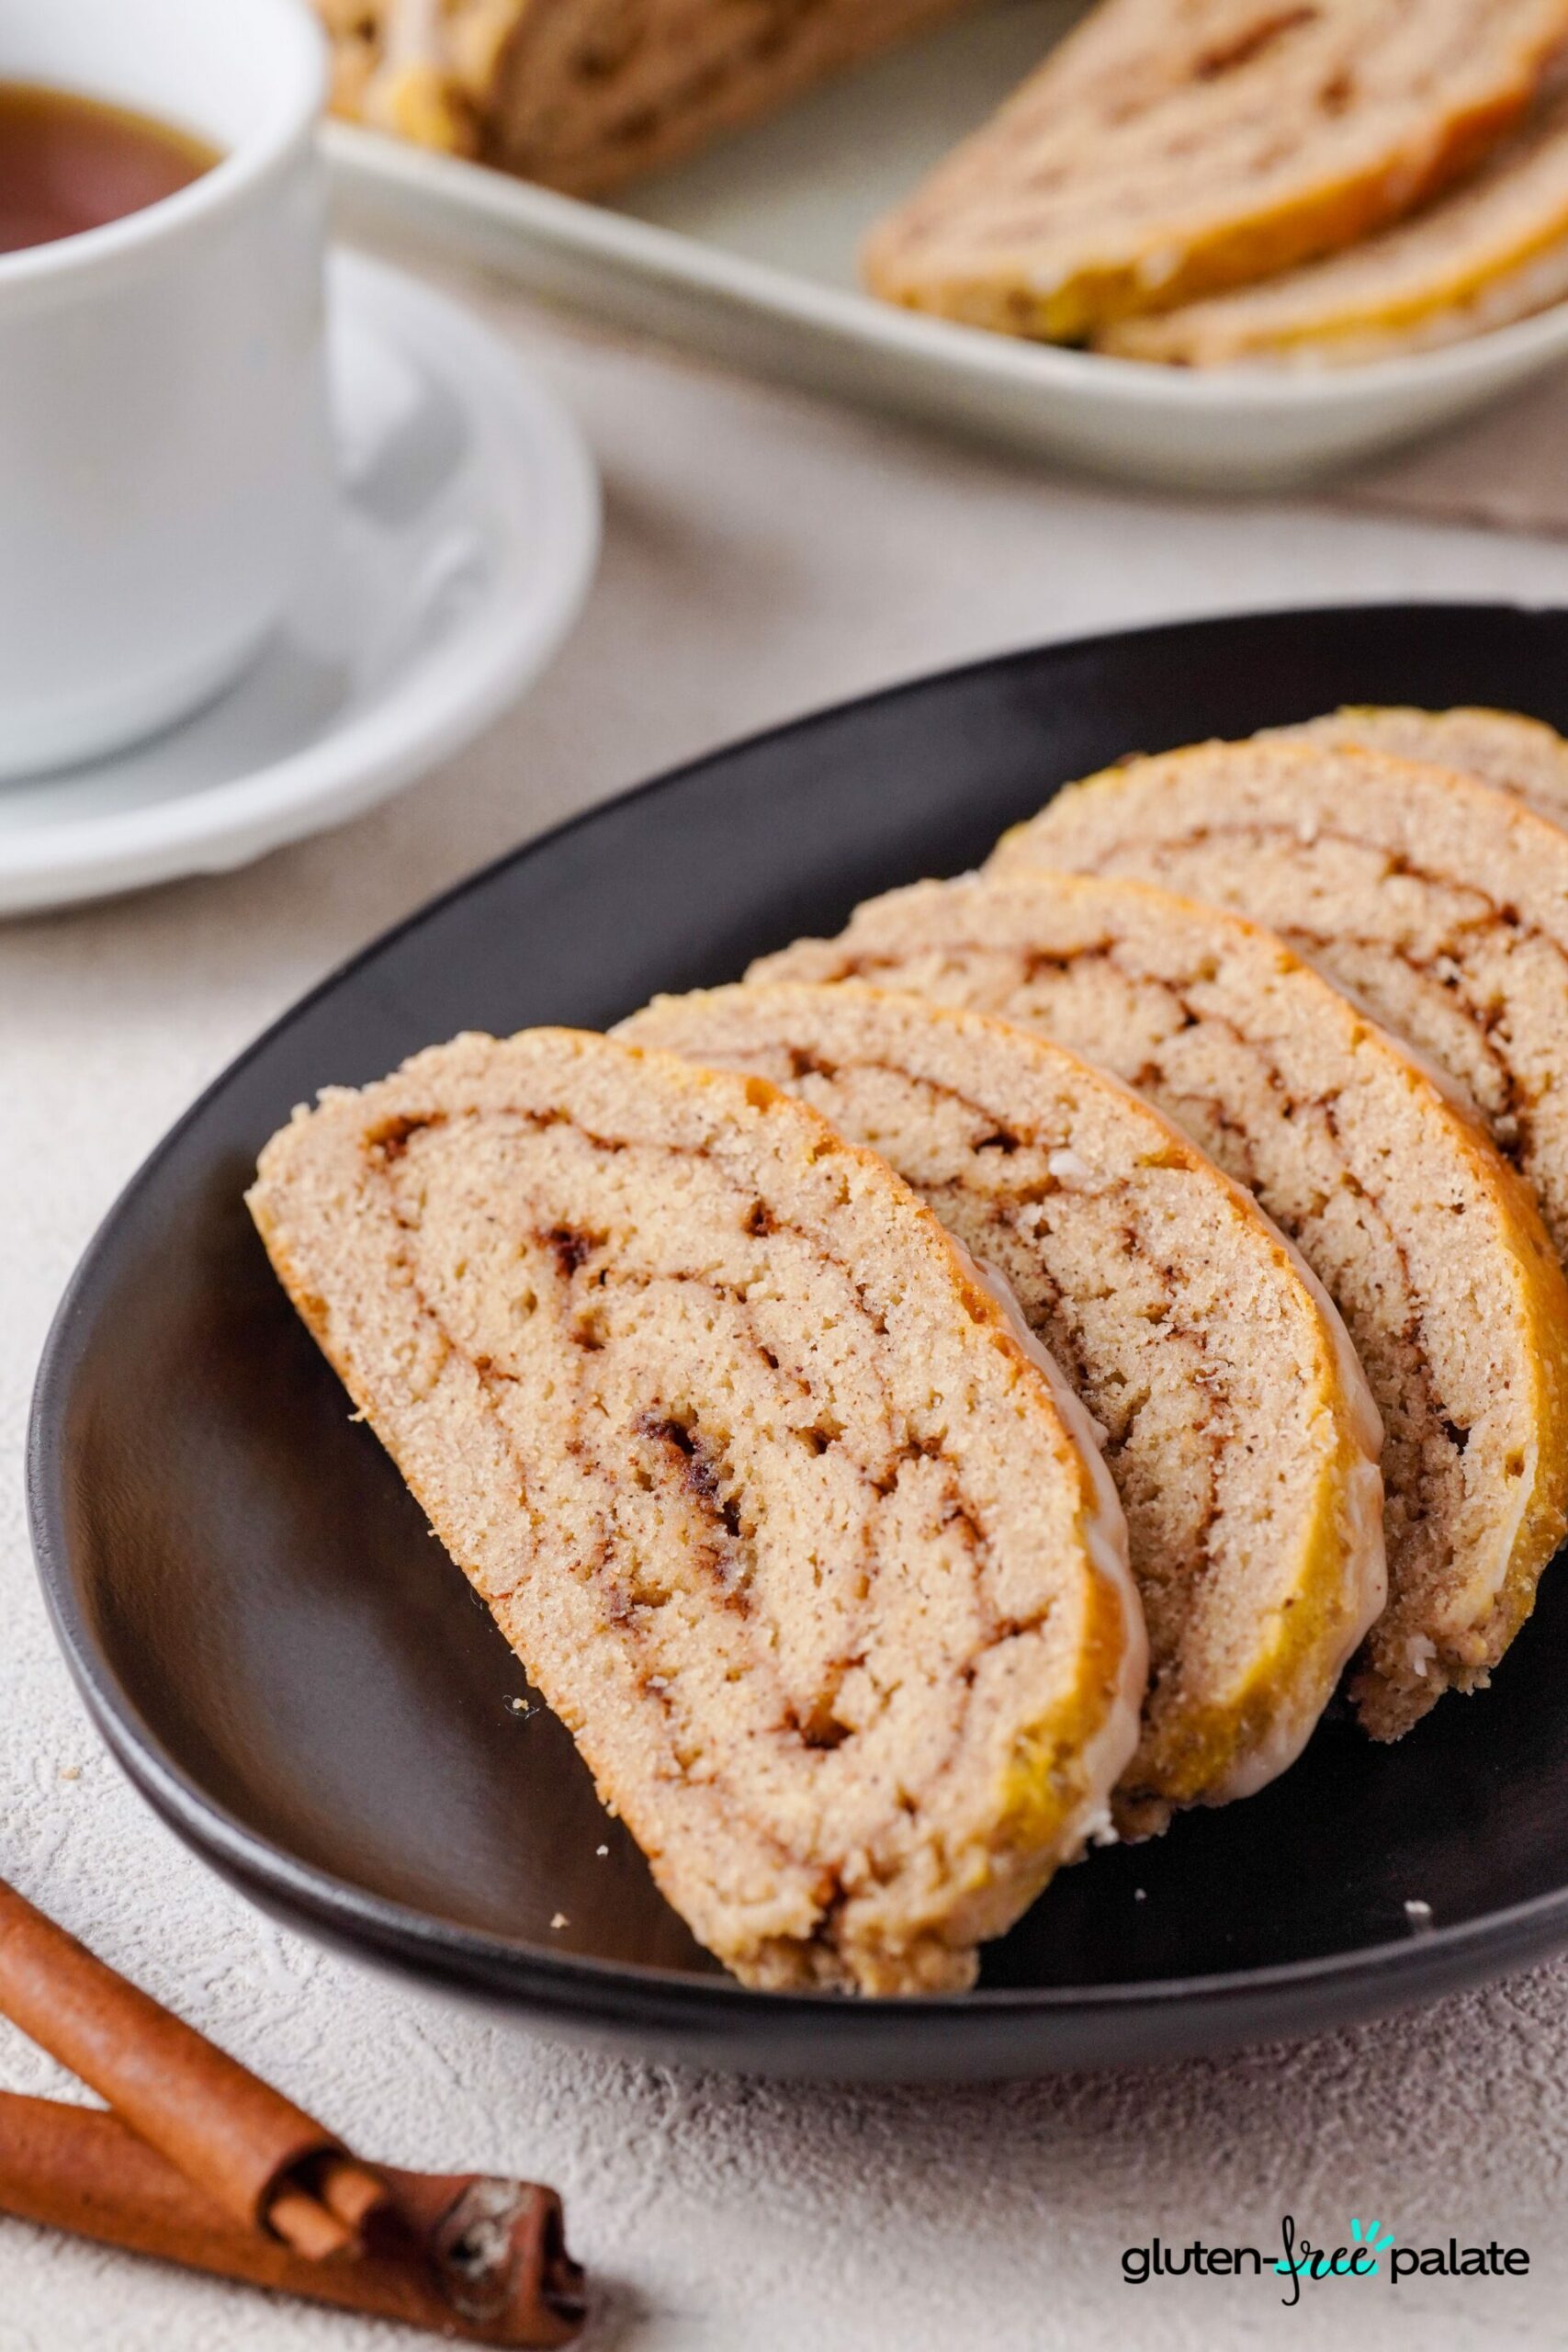 Gluten-Free cinnamon bread sliced on a black plate.